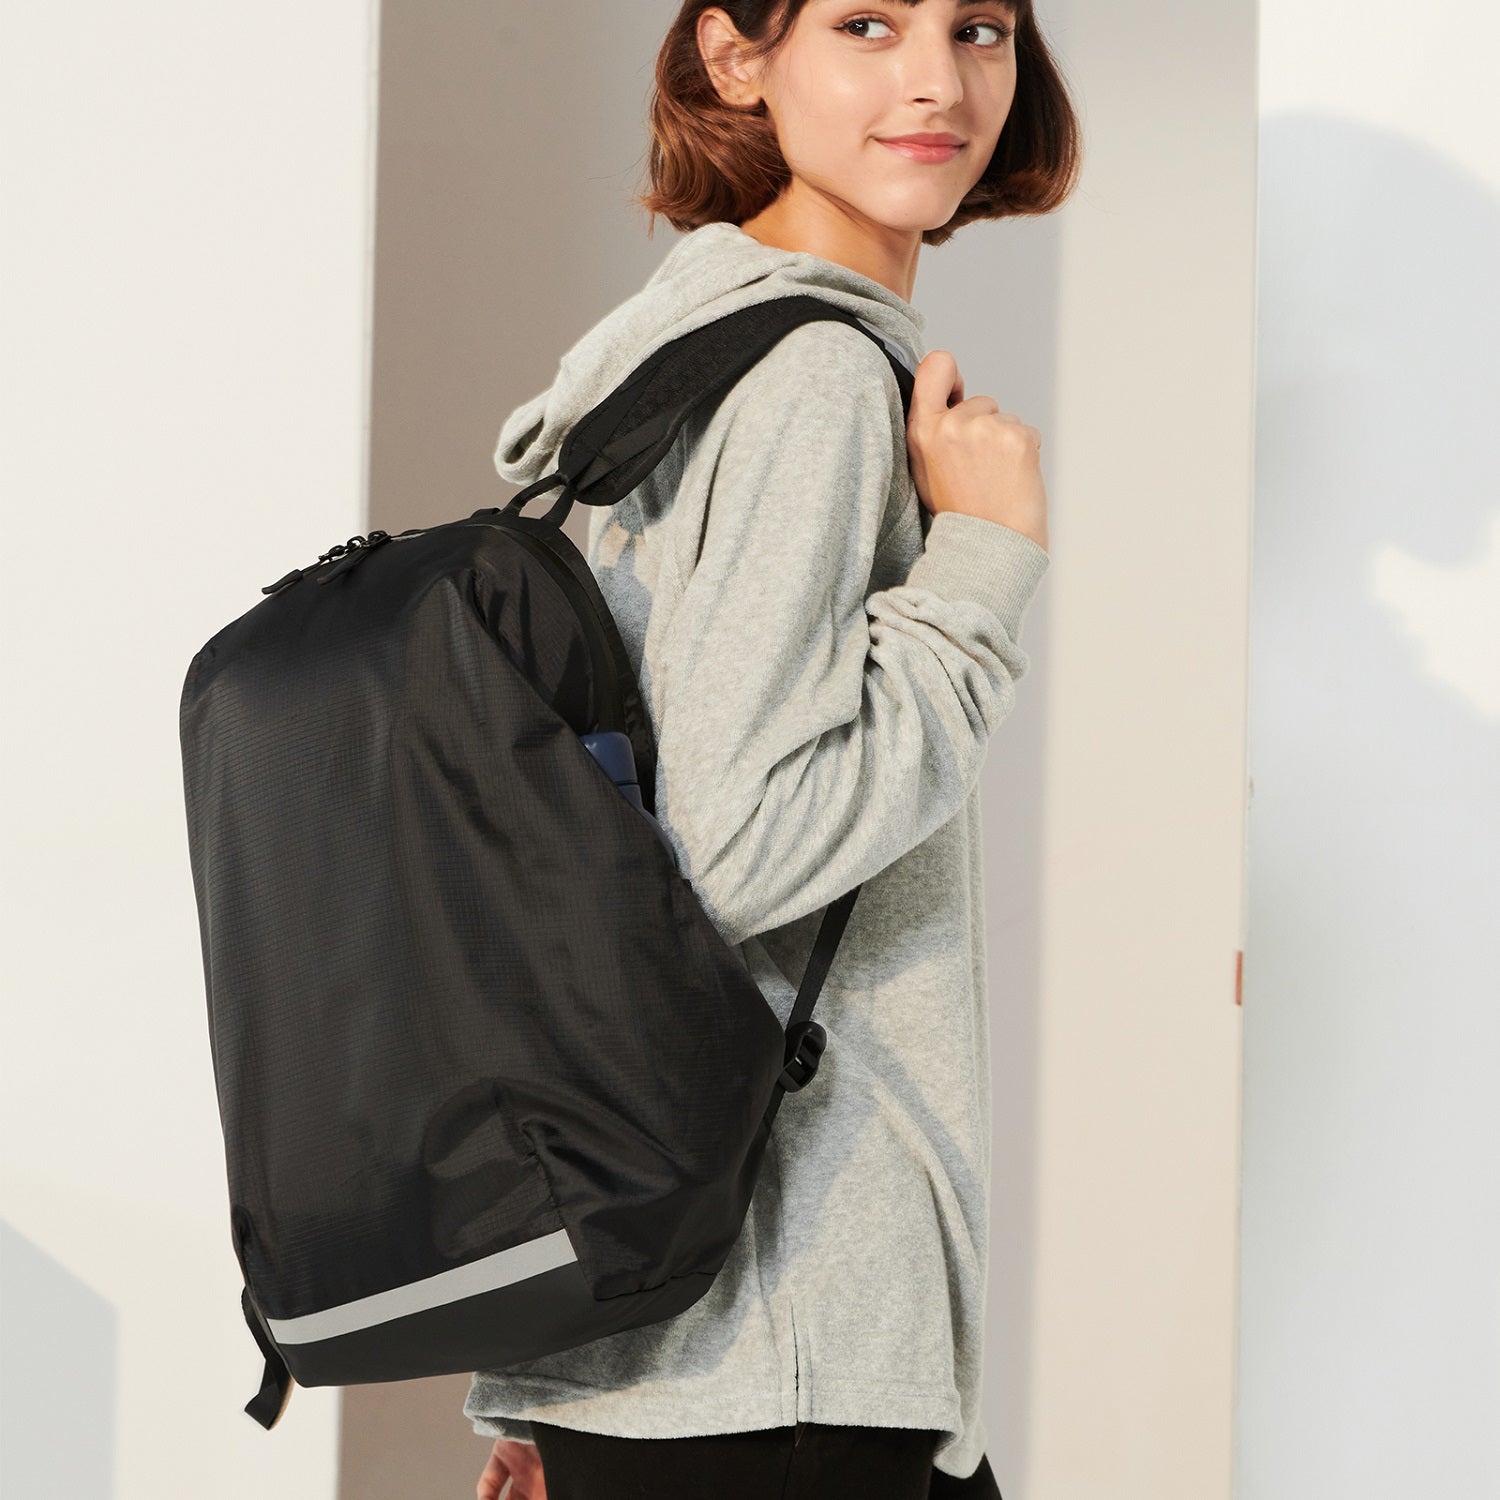 Black Travel backpack carry 